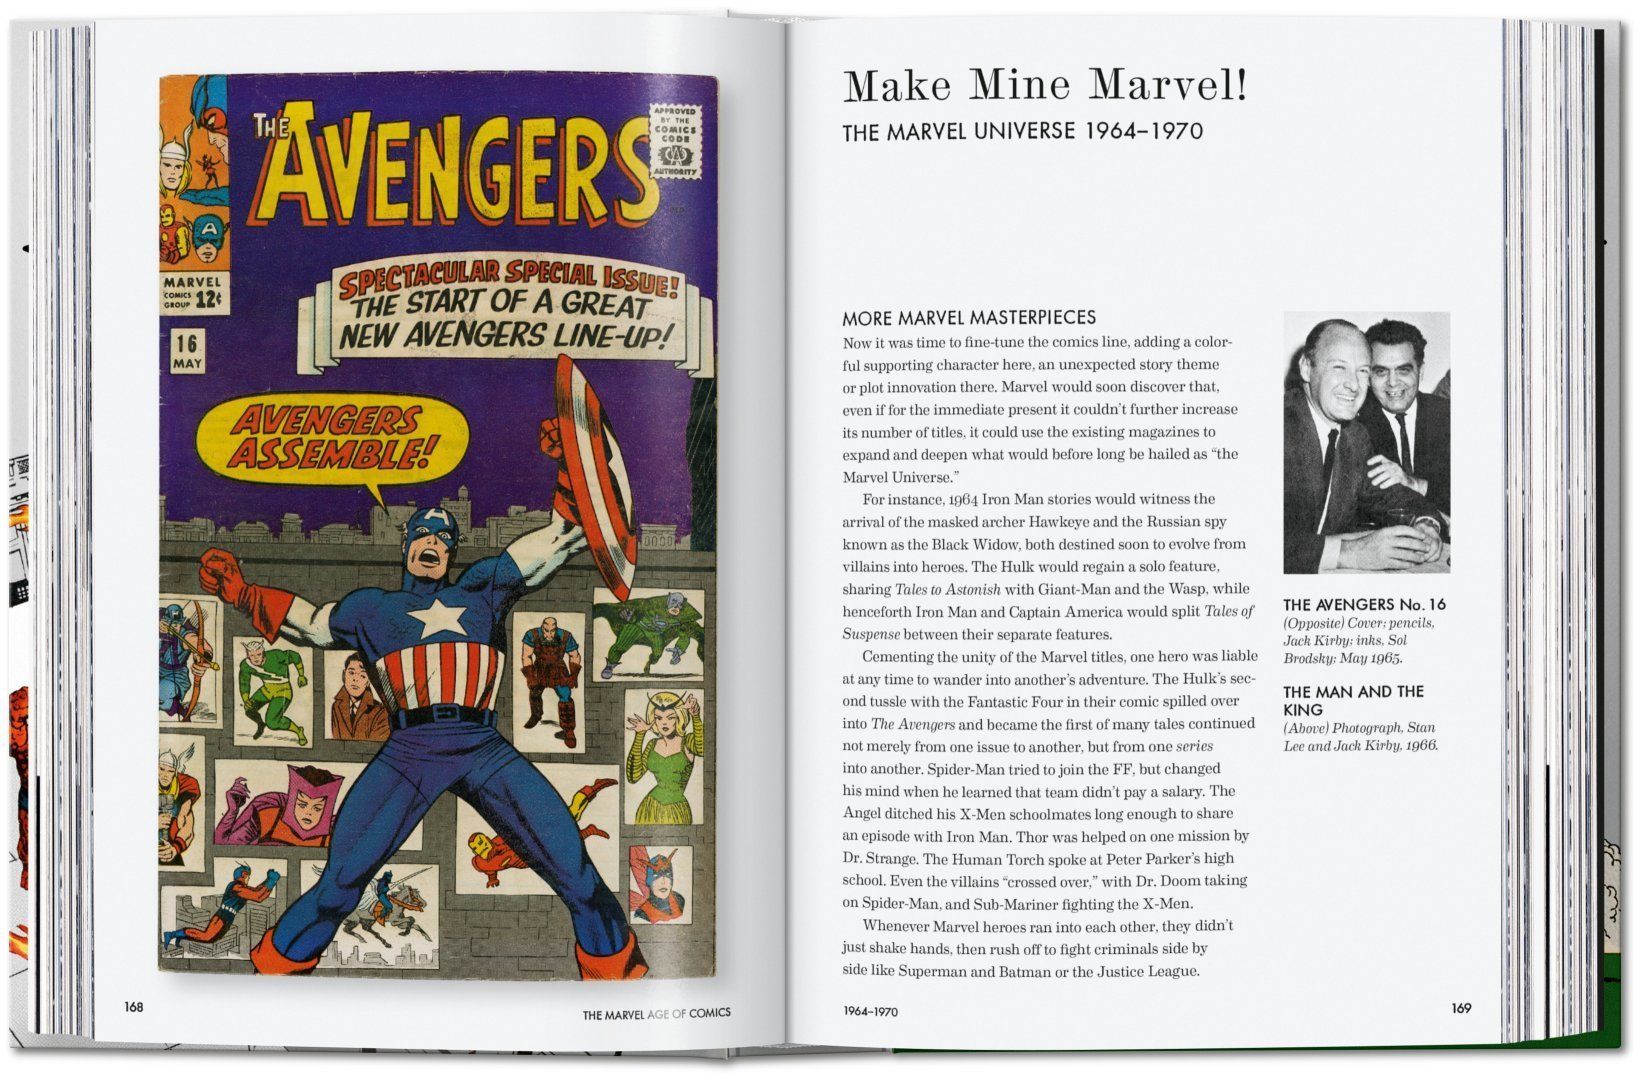 he Marvel Age of Comics 1961-1978